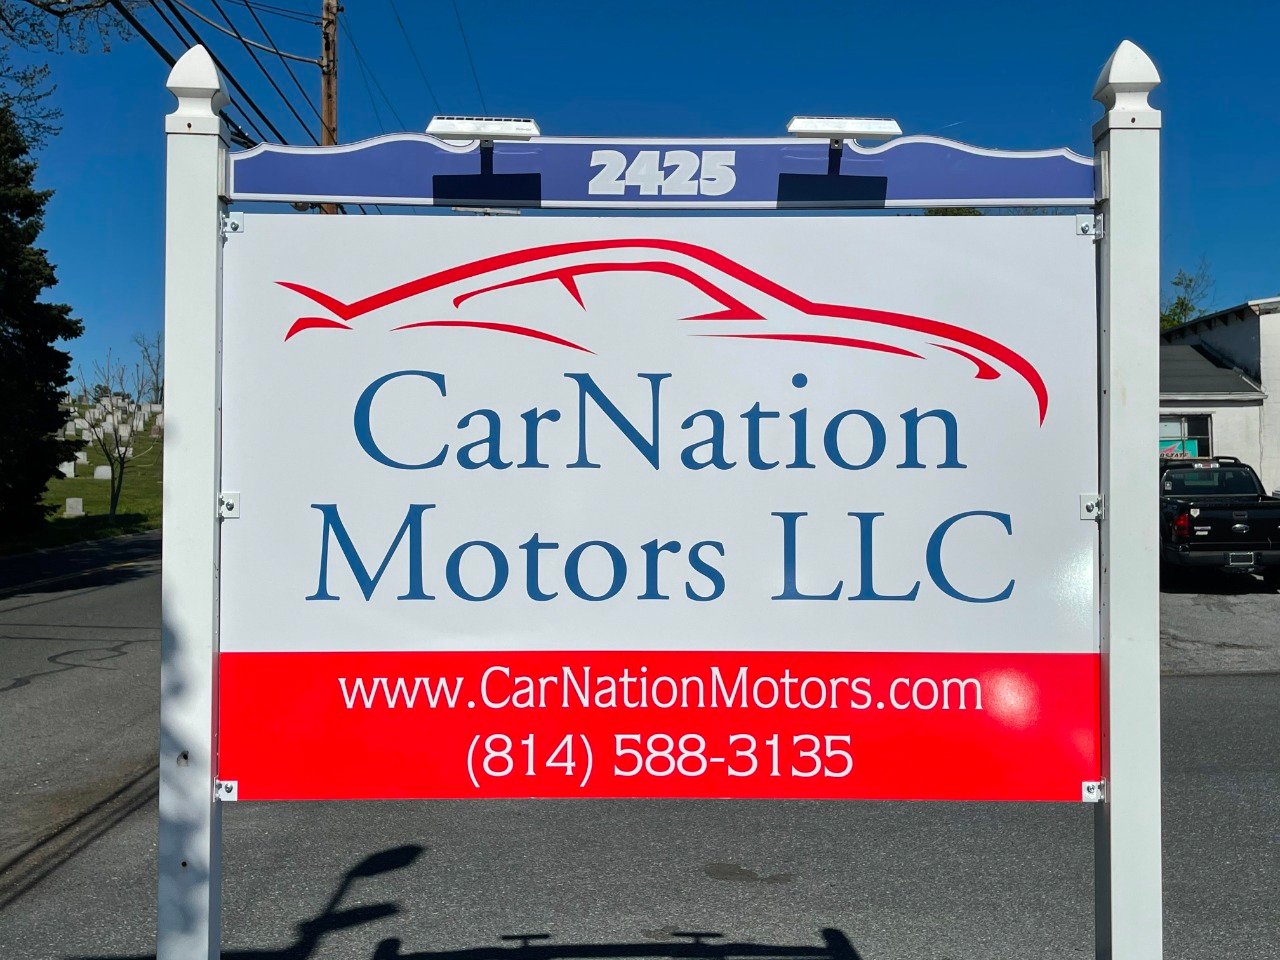 CarNation Motors LLC